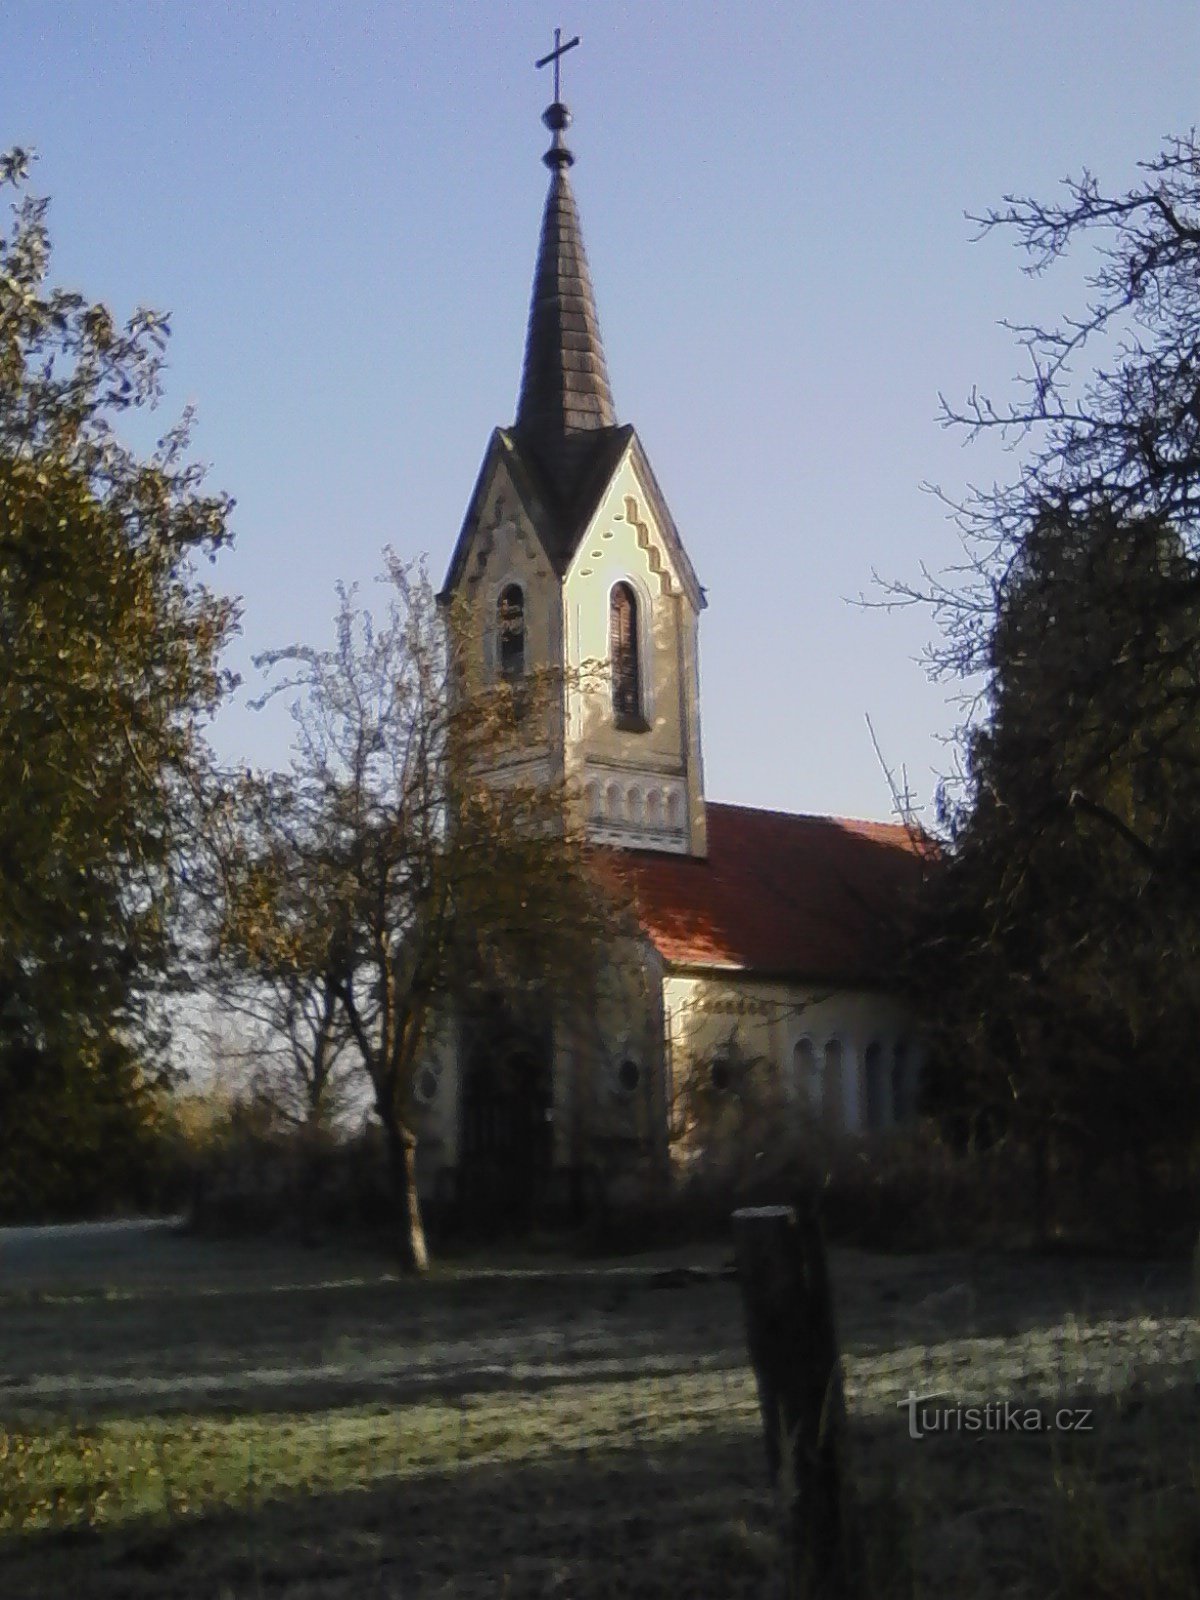 2. Chapel of Sedmibolestná P. Maria near Jetřichovice from 1859.